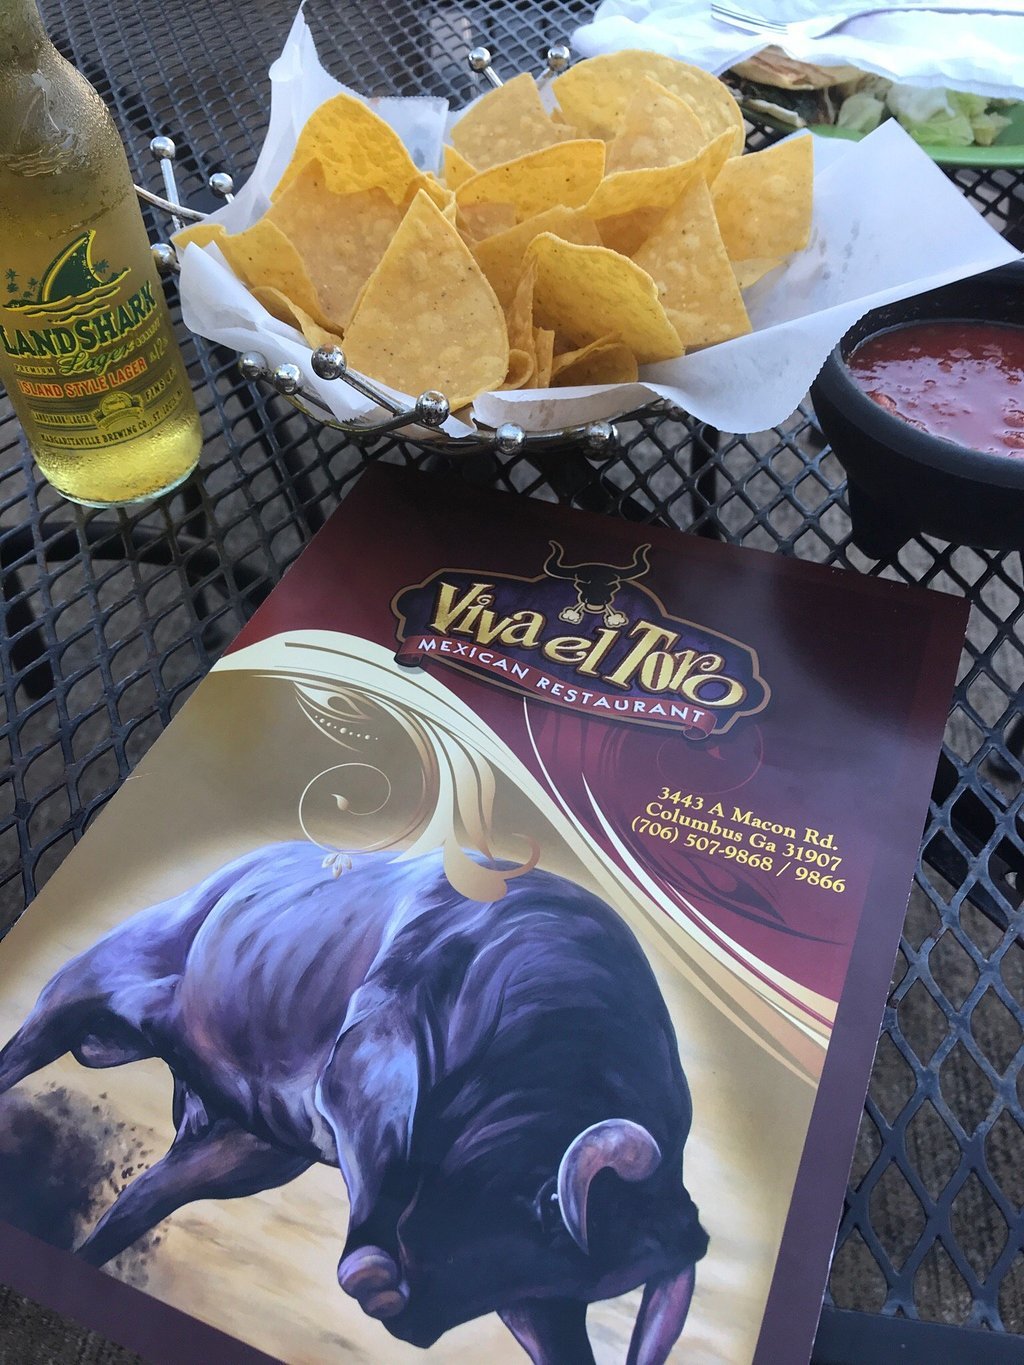 Viva El Toro Mexican Restaurant